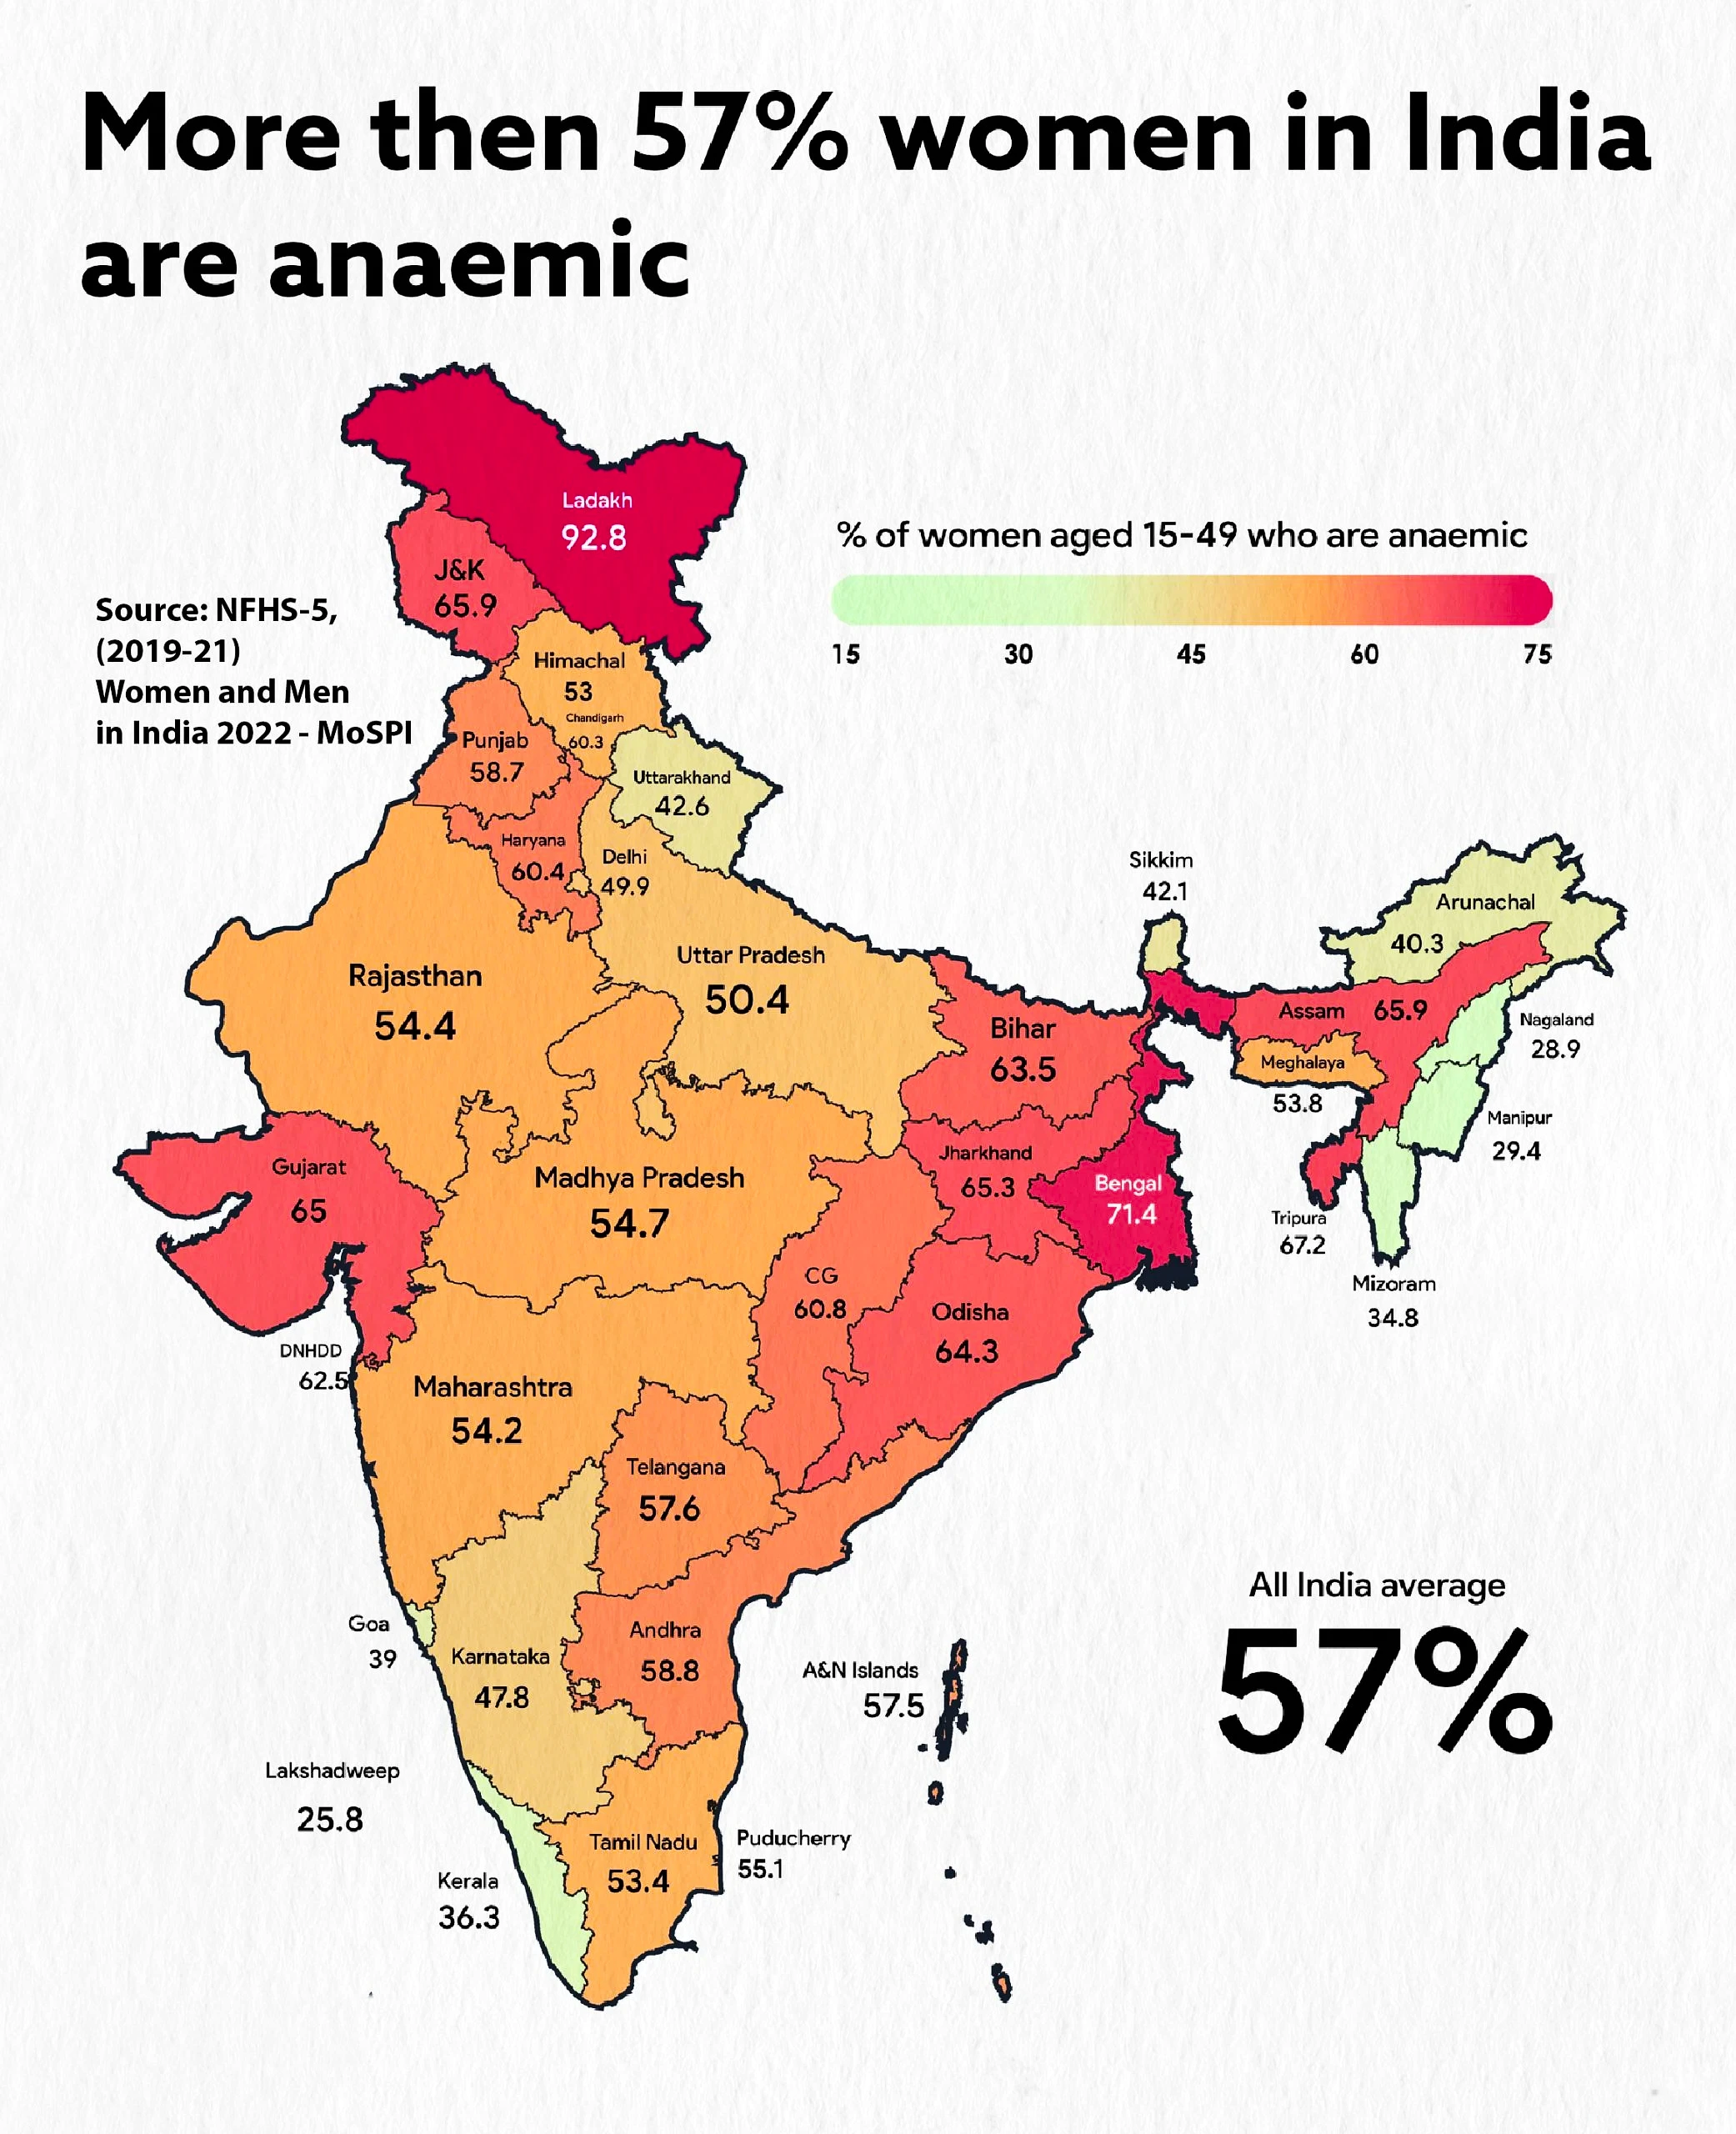 Malnutrition in India
